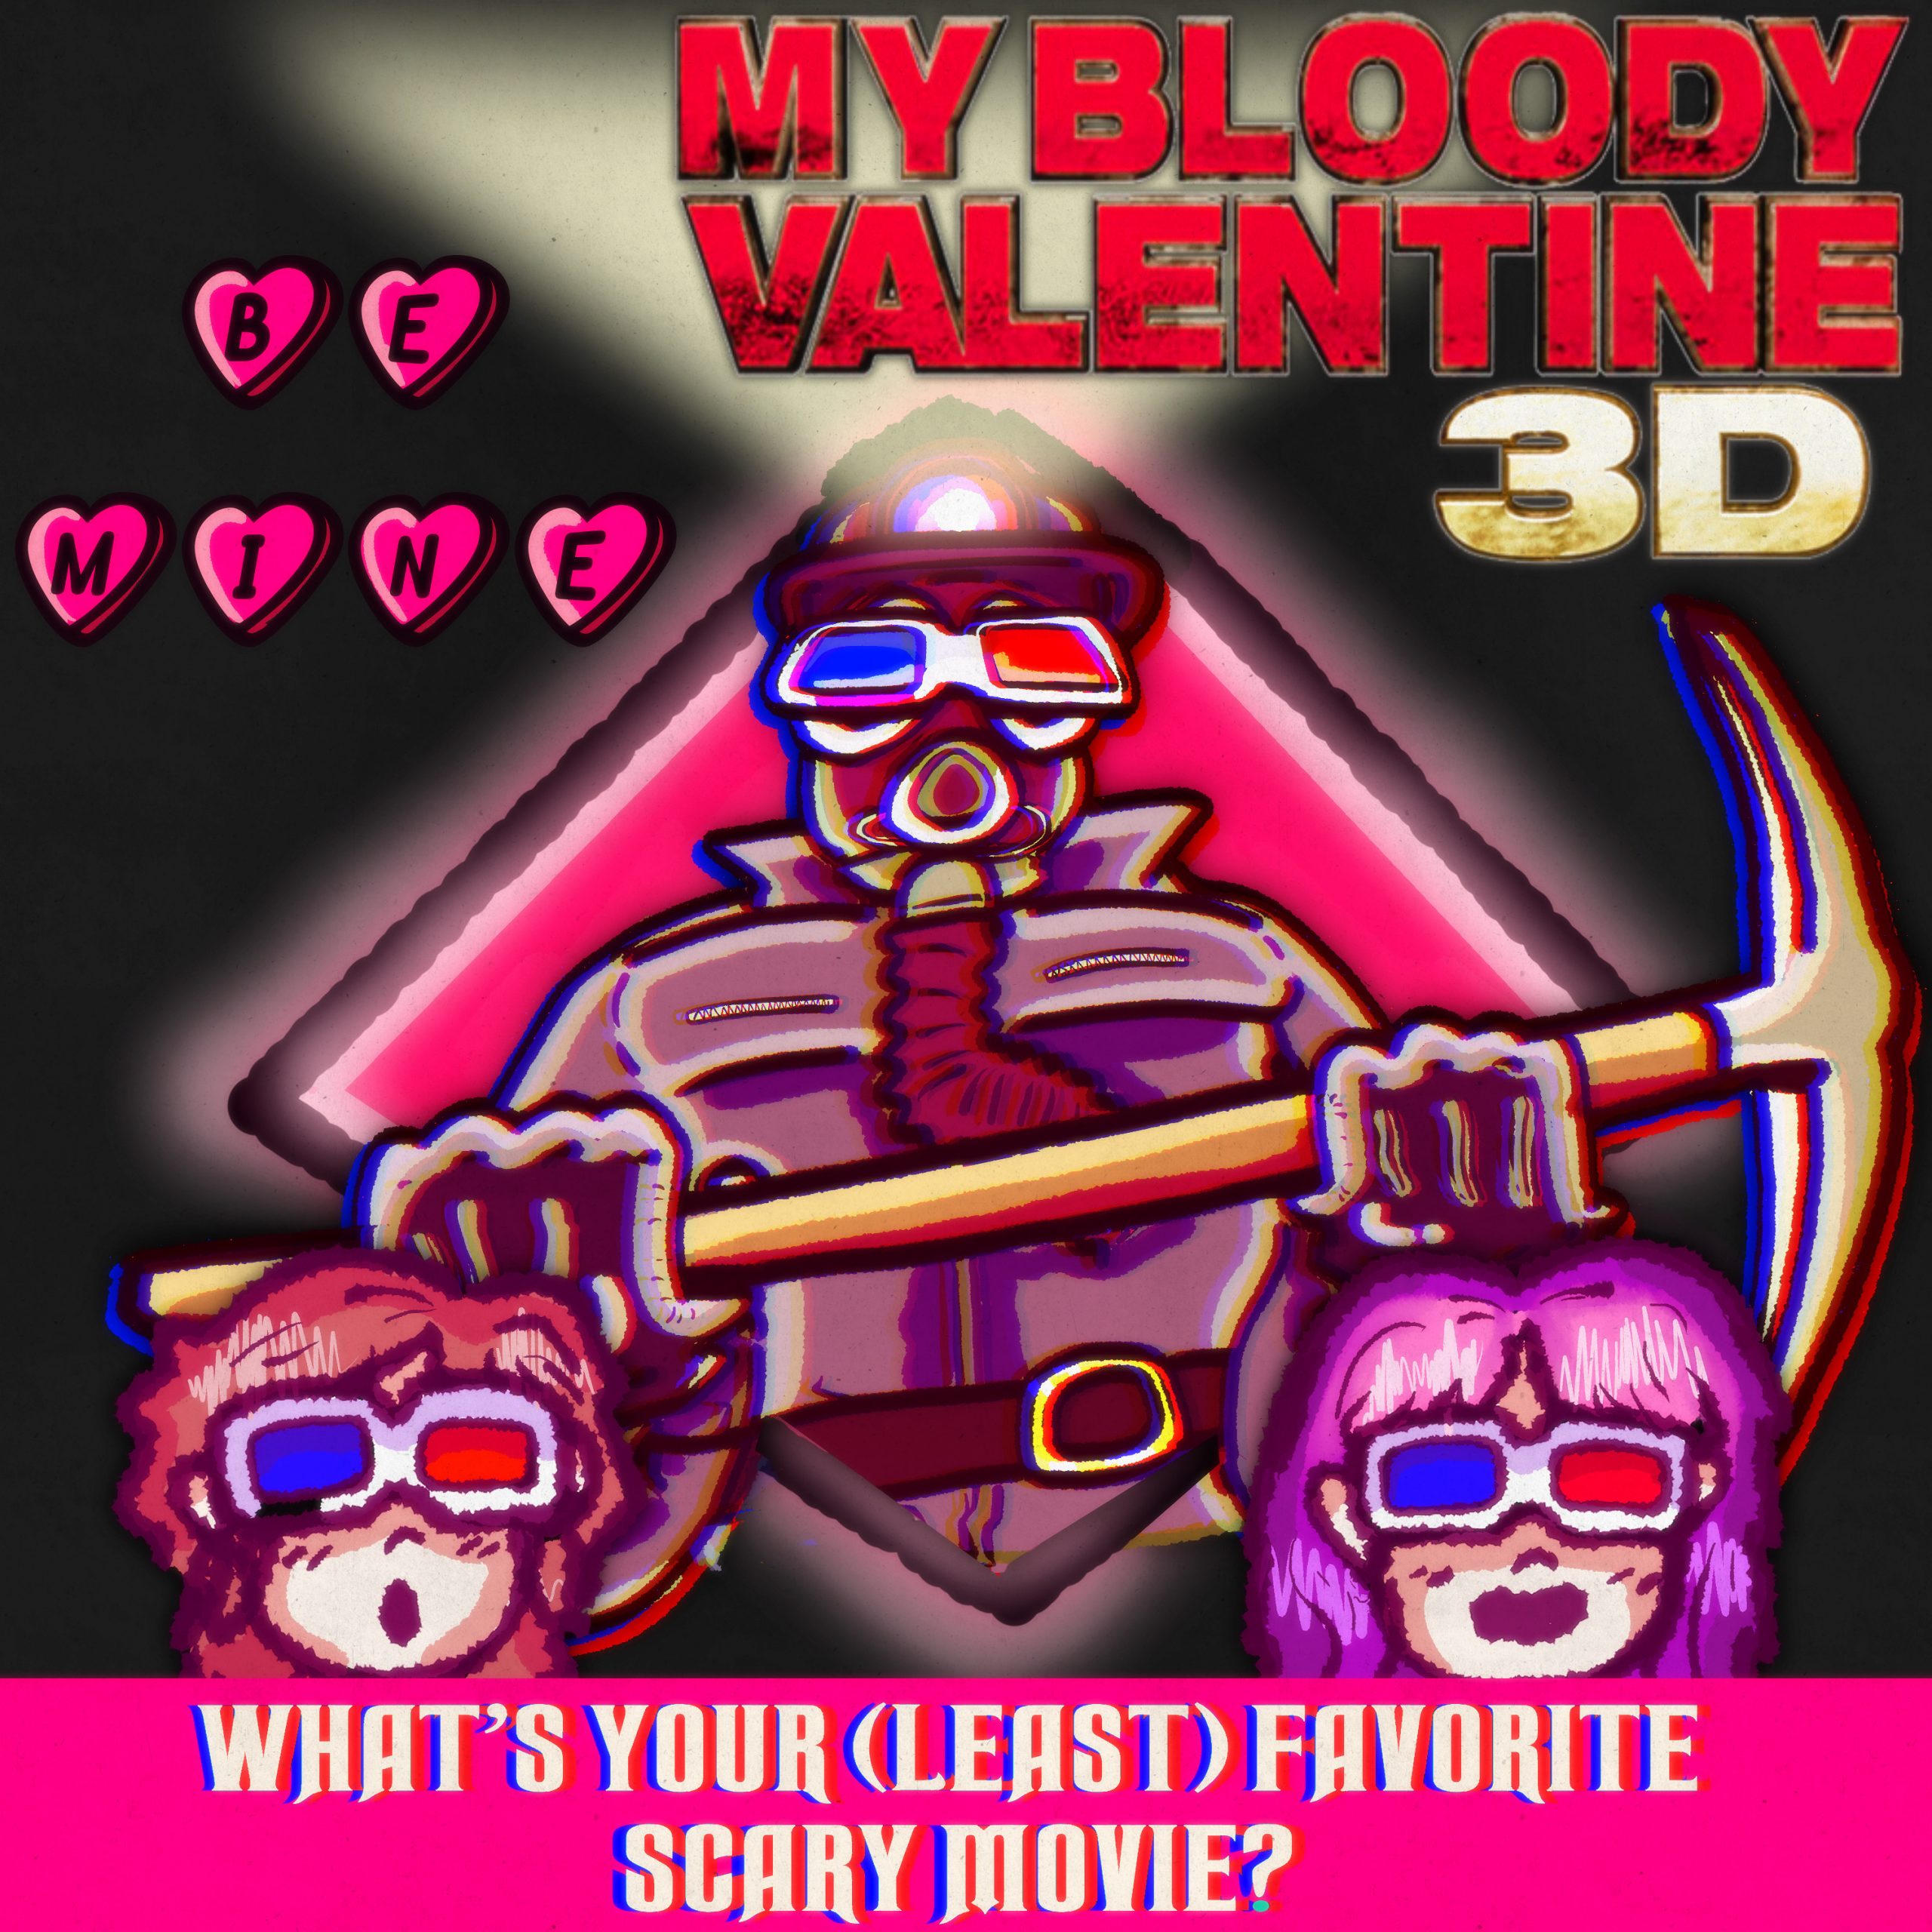 #193: My Bloody Valentine 3D (2009)